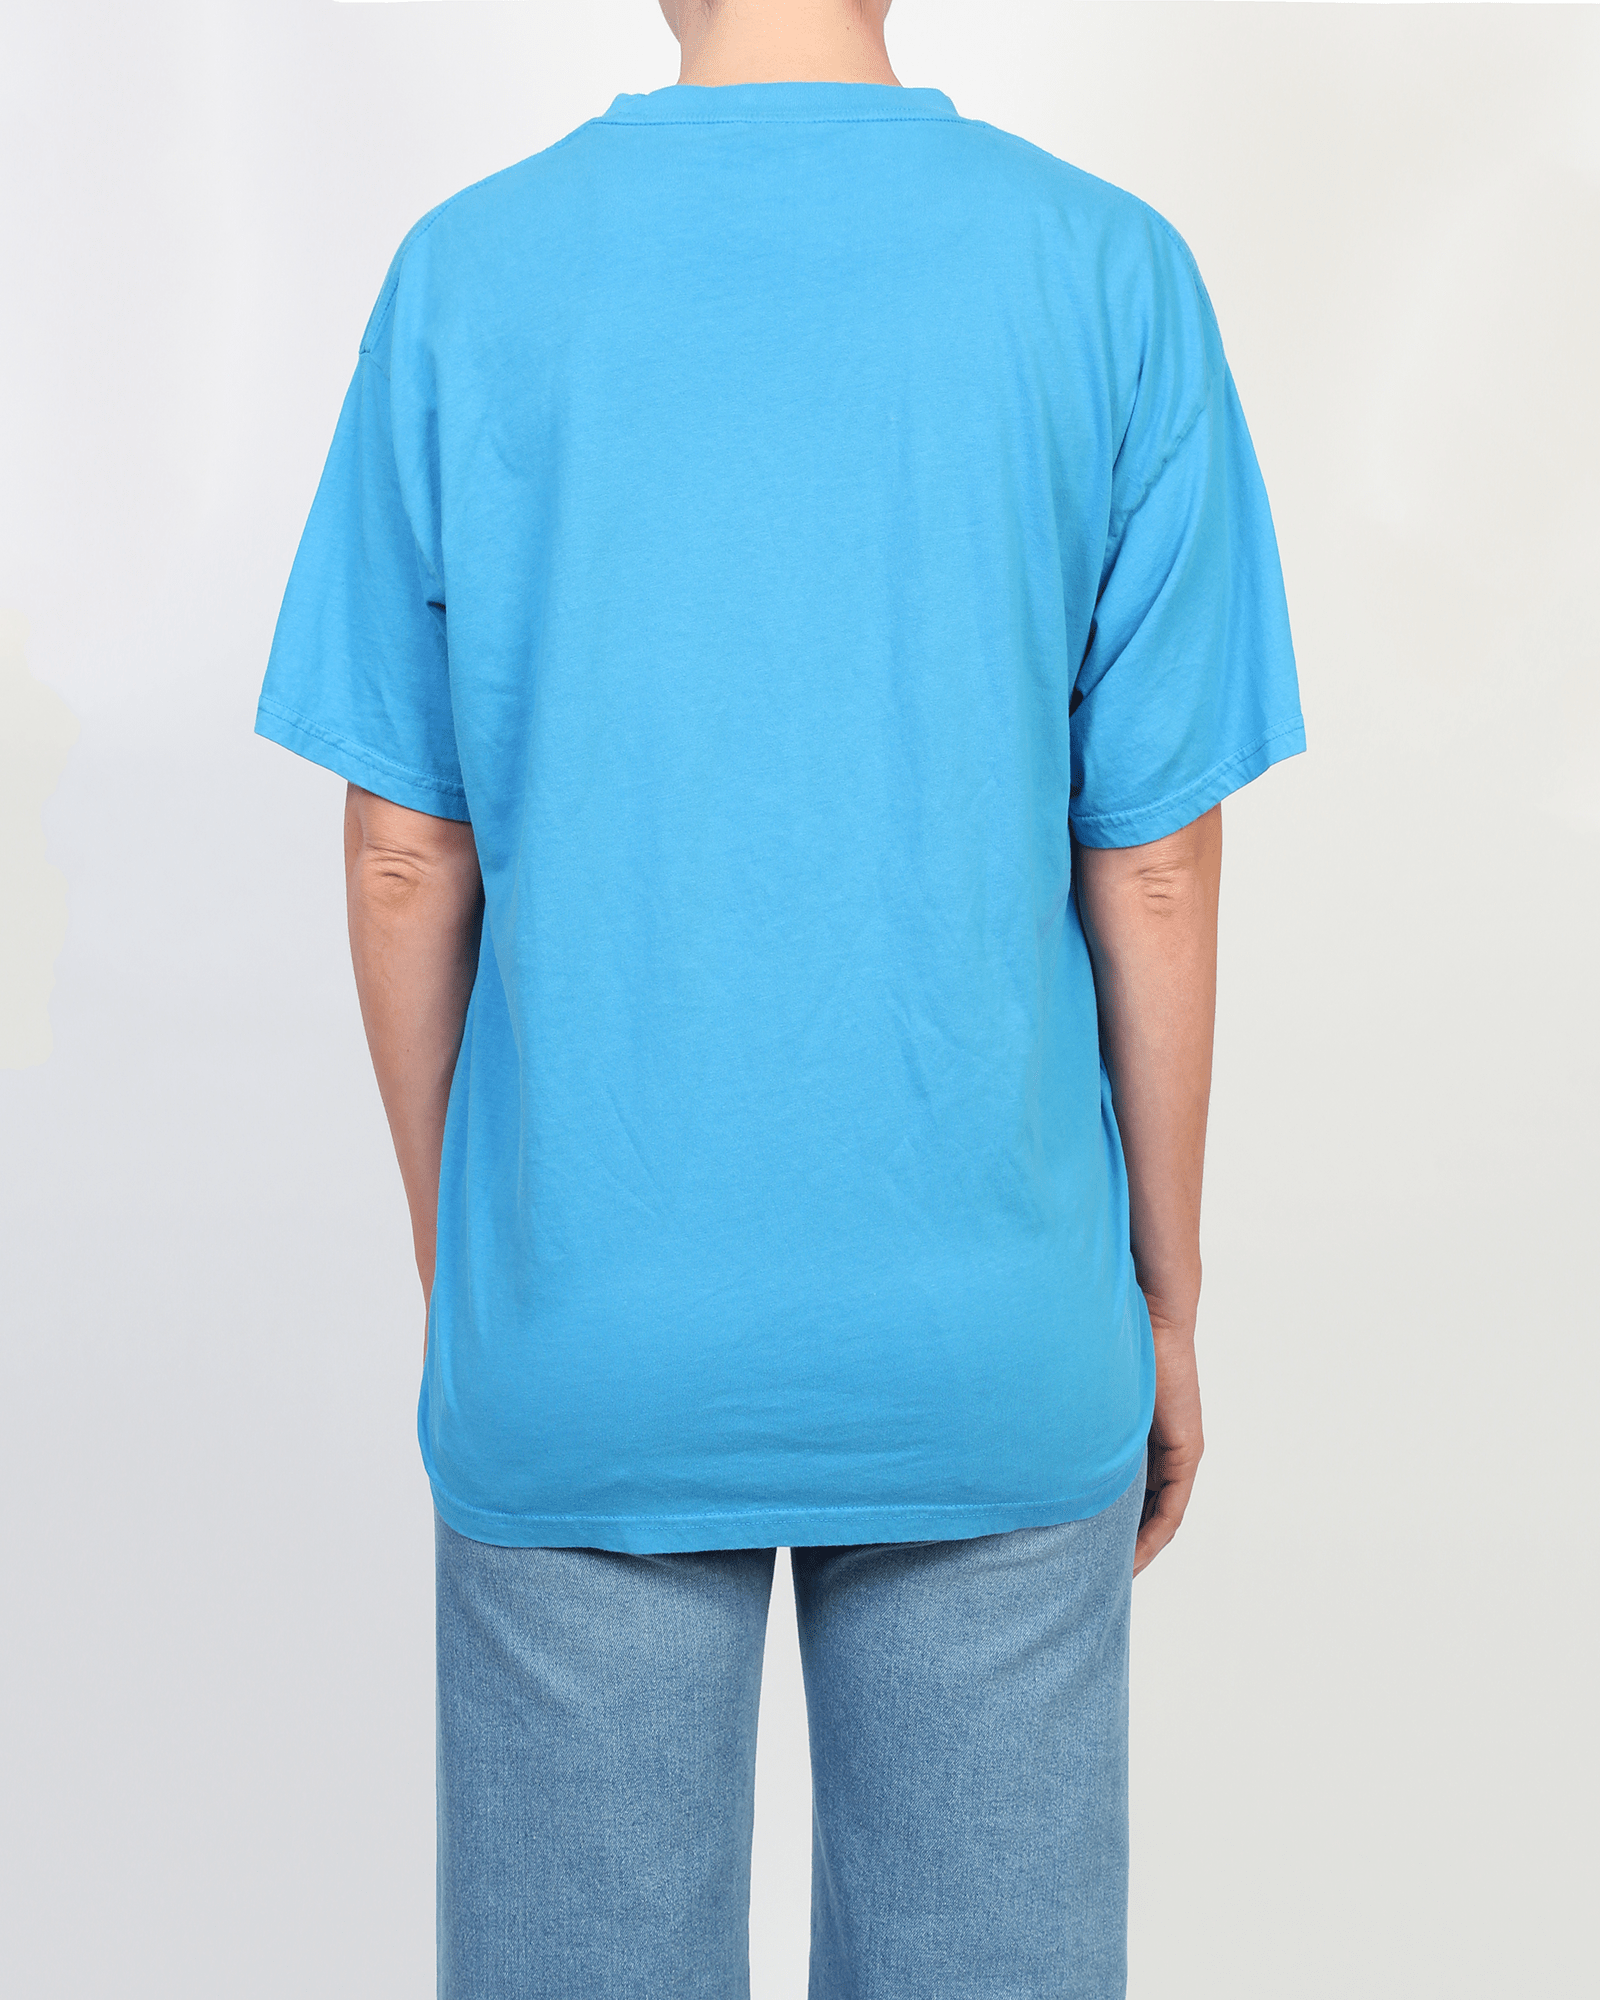 Sexsi T-Shirt - True Blue